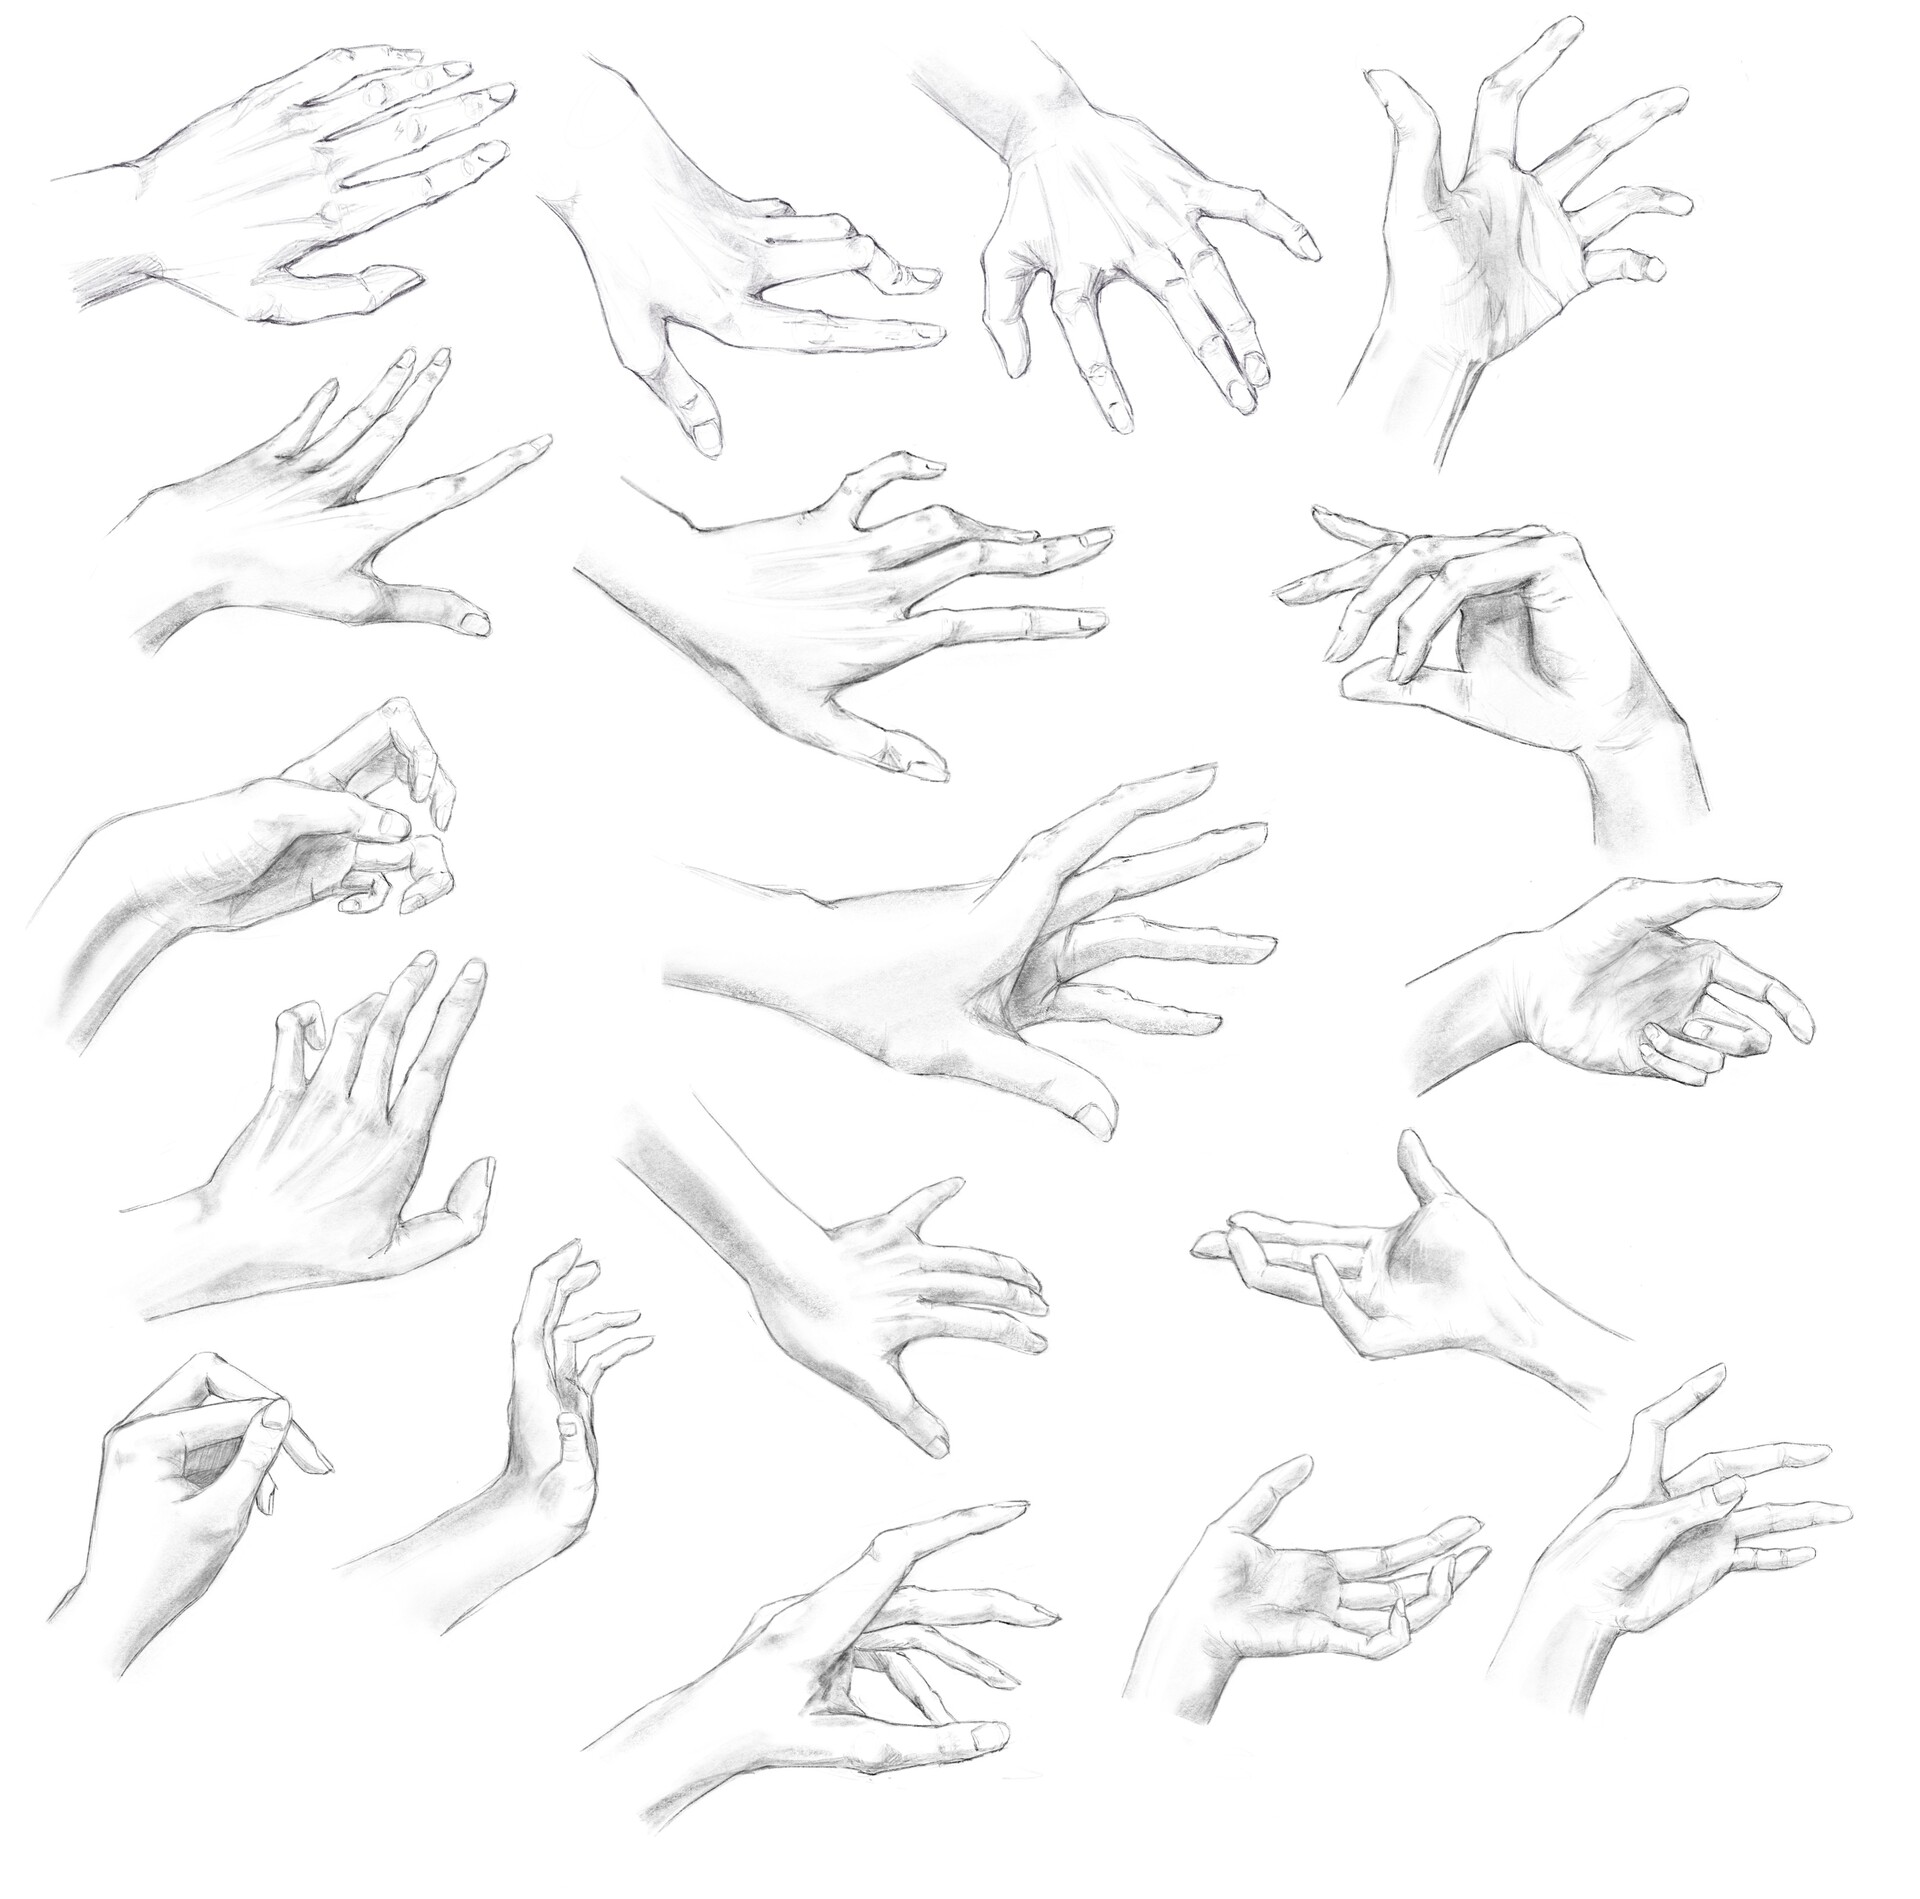 ArtStation - Anatomy study - hands